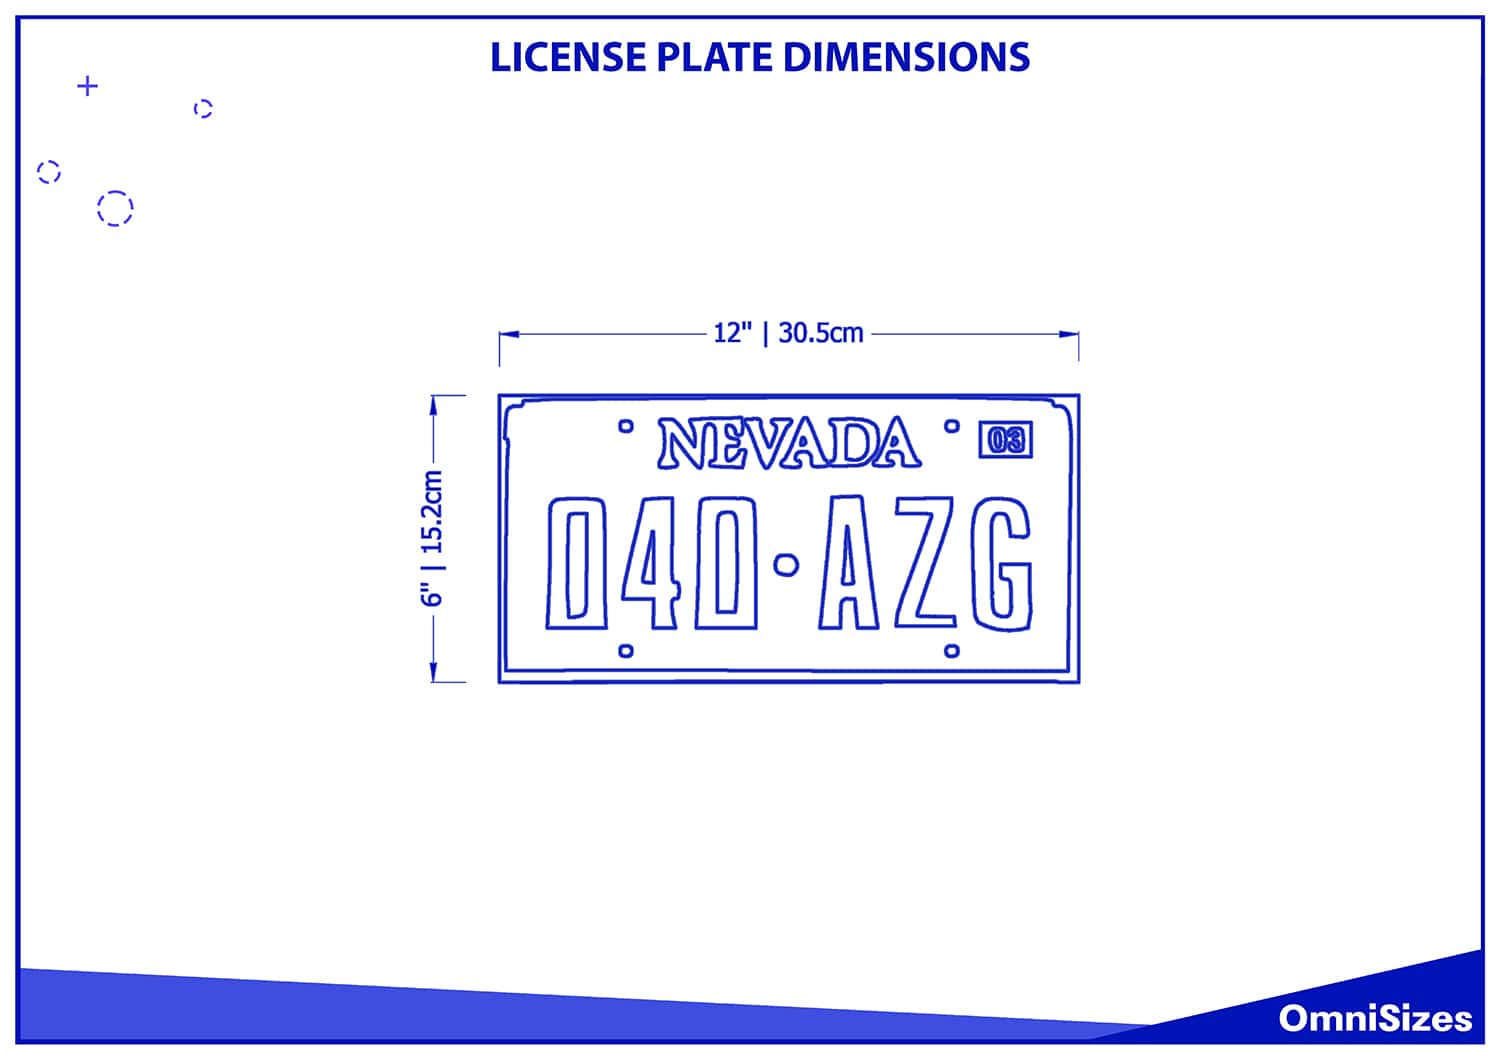 License plate dimensions